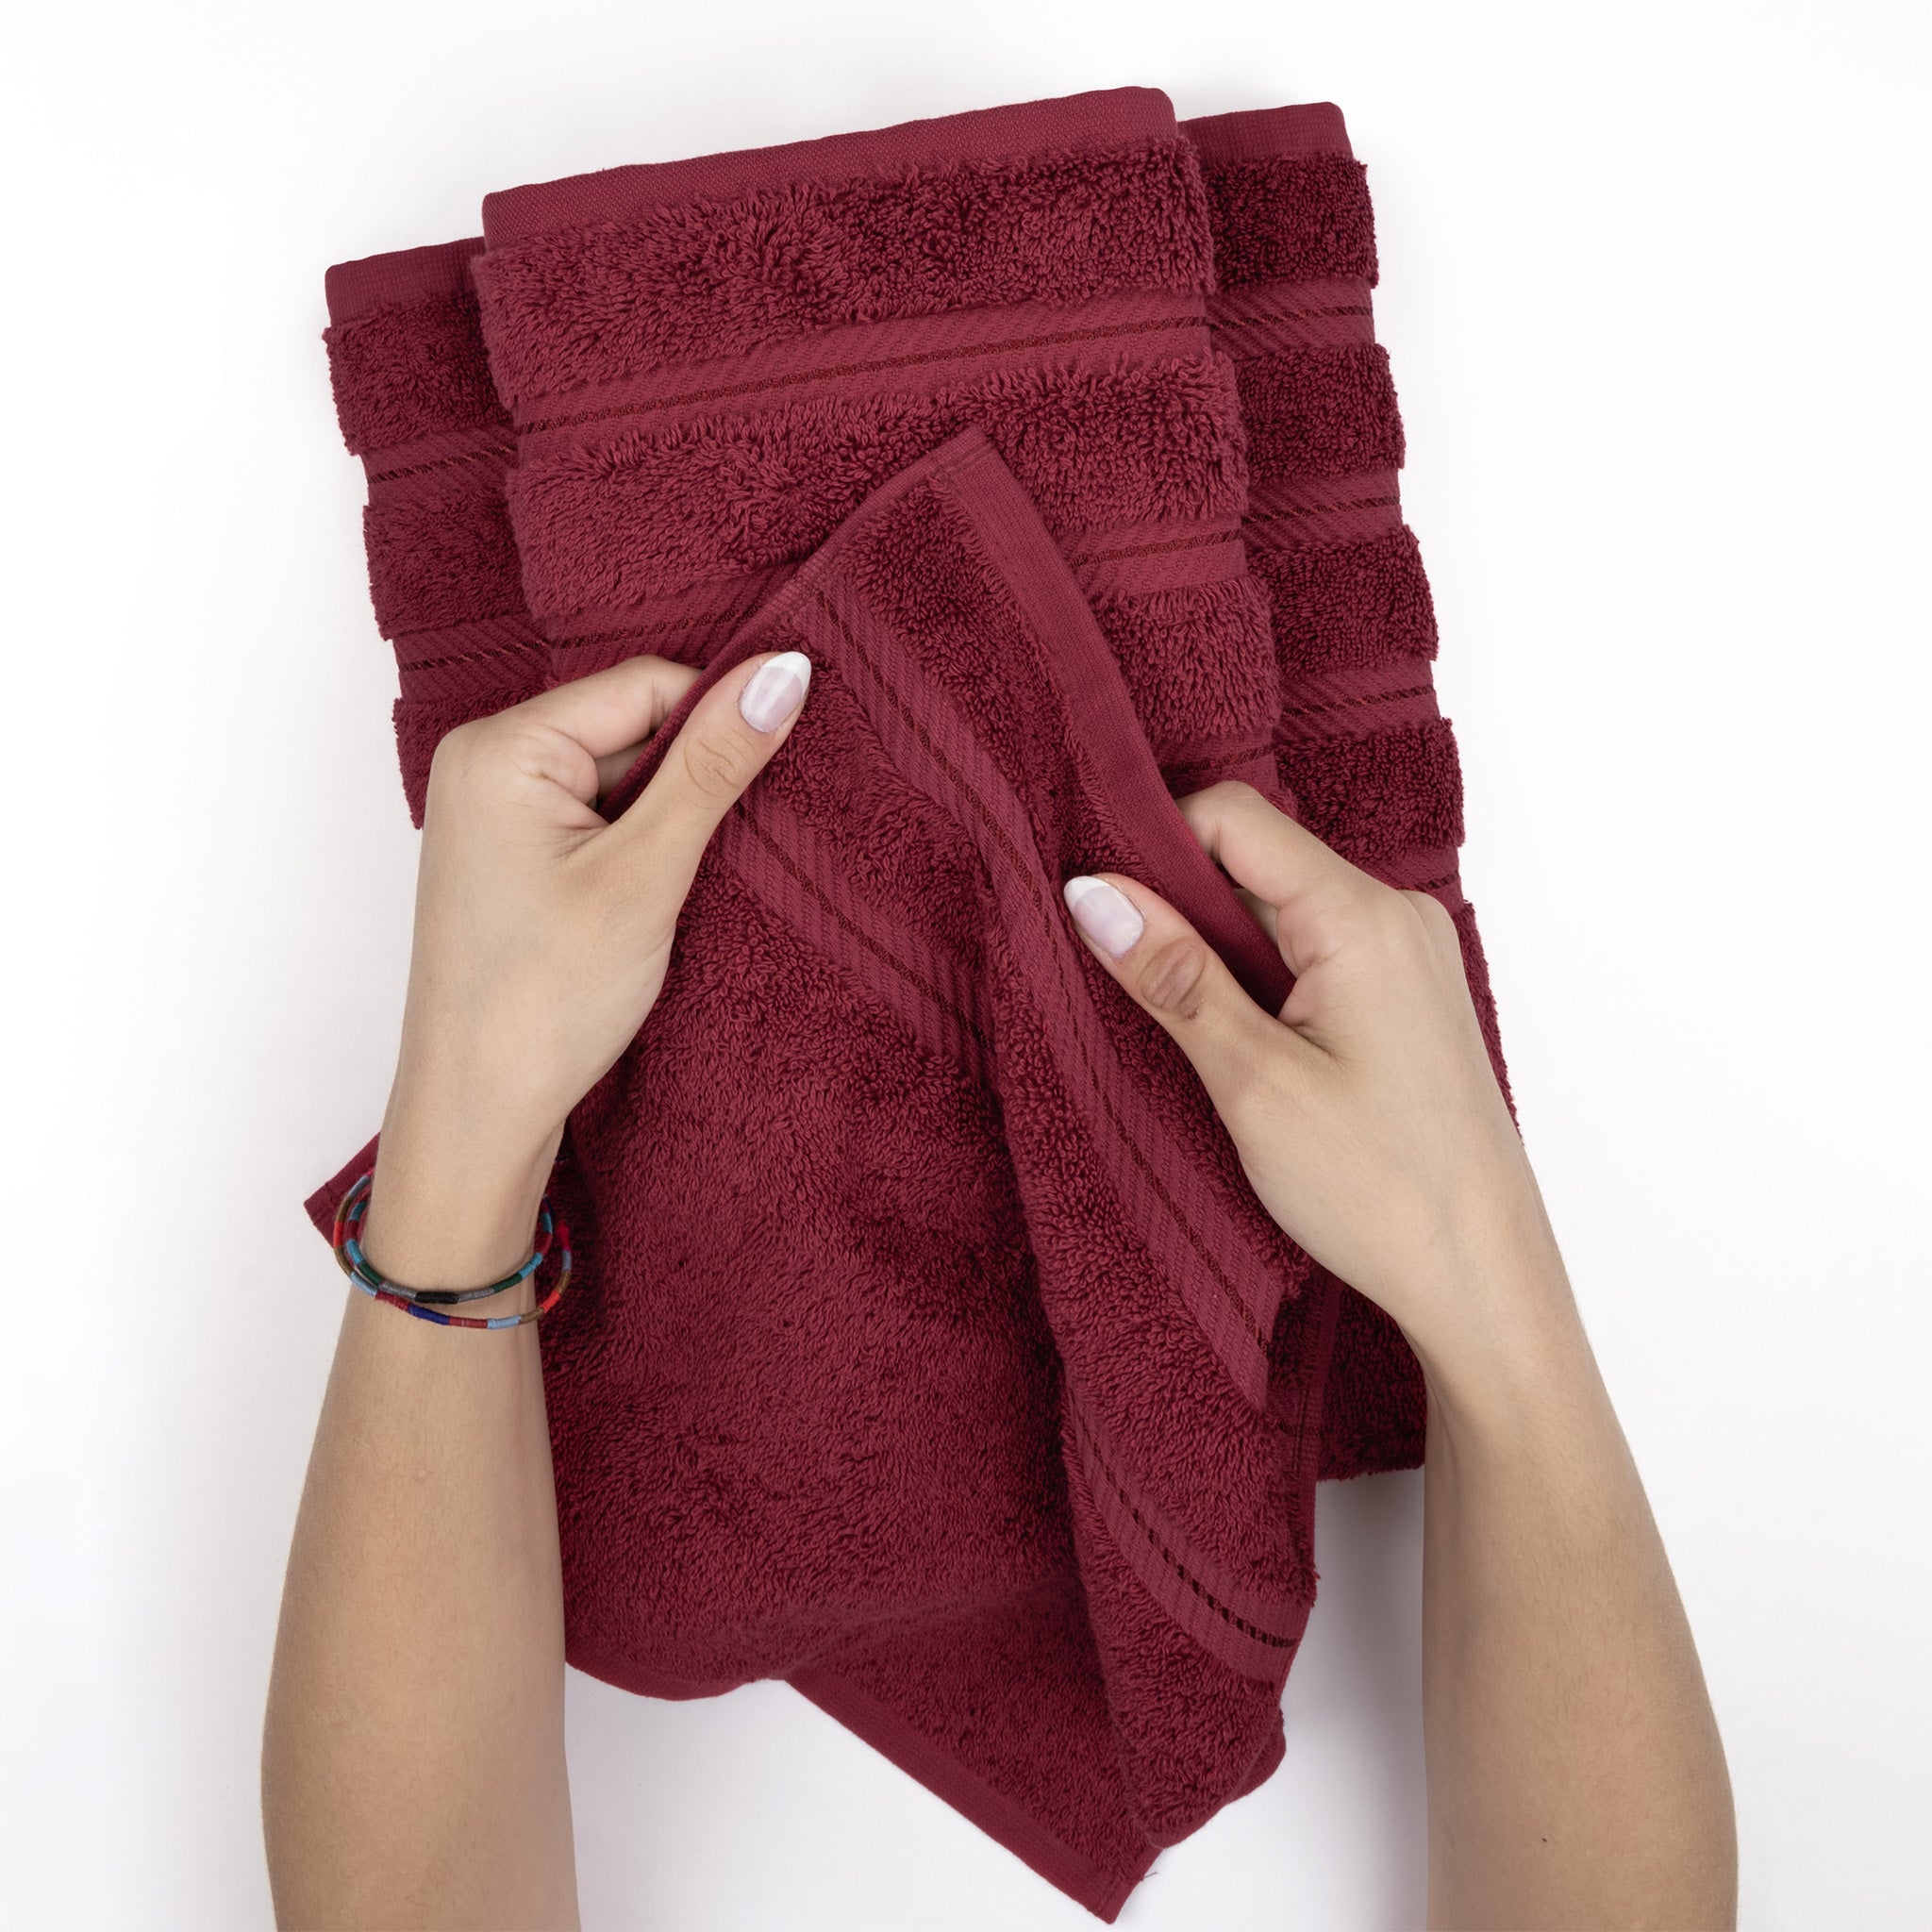  American Soft Linen 100% Turkish Cotton 4 Pack Hand Towel Set  bordeaux-red-5